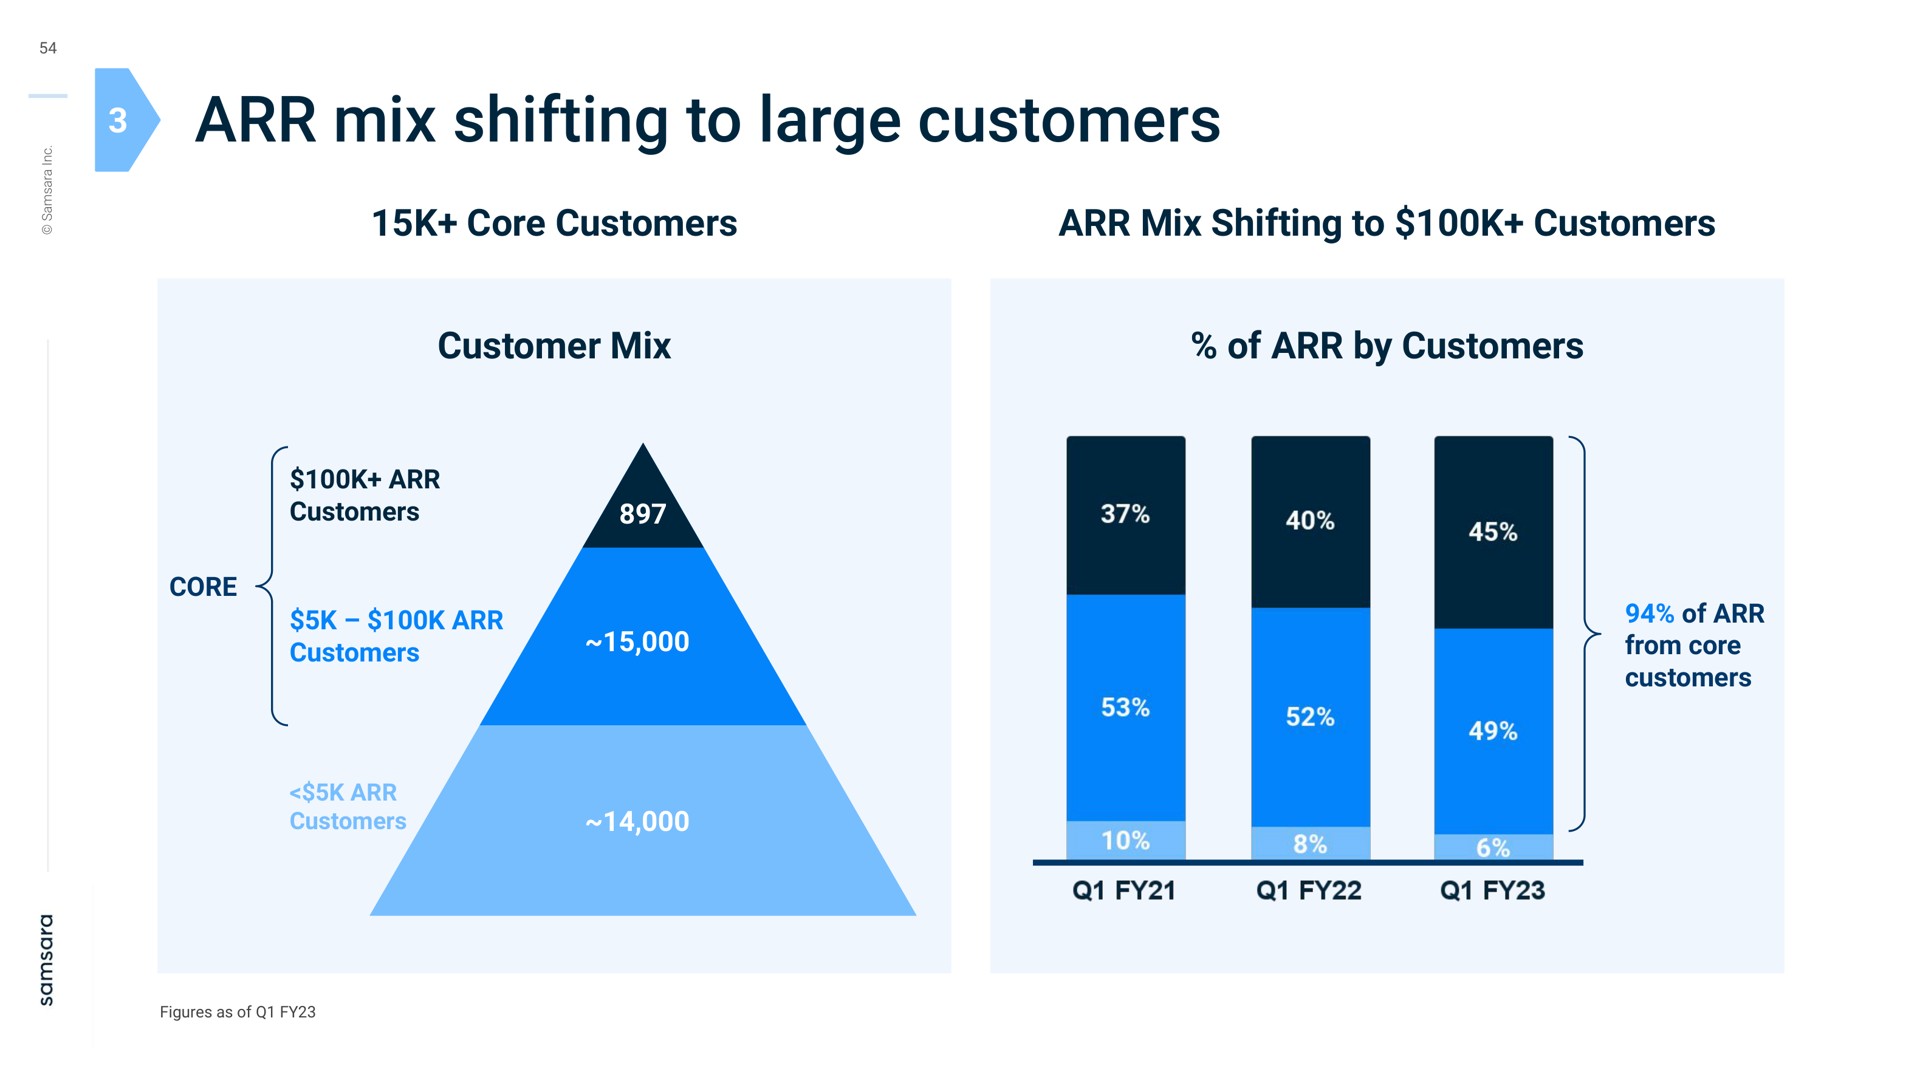 mix shifting to large customers core customers mix shifting to customers customer mix of by customers customers core customers customers of from core customers | Samsara